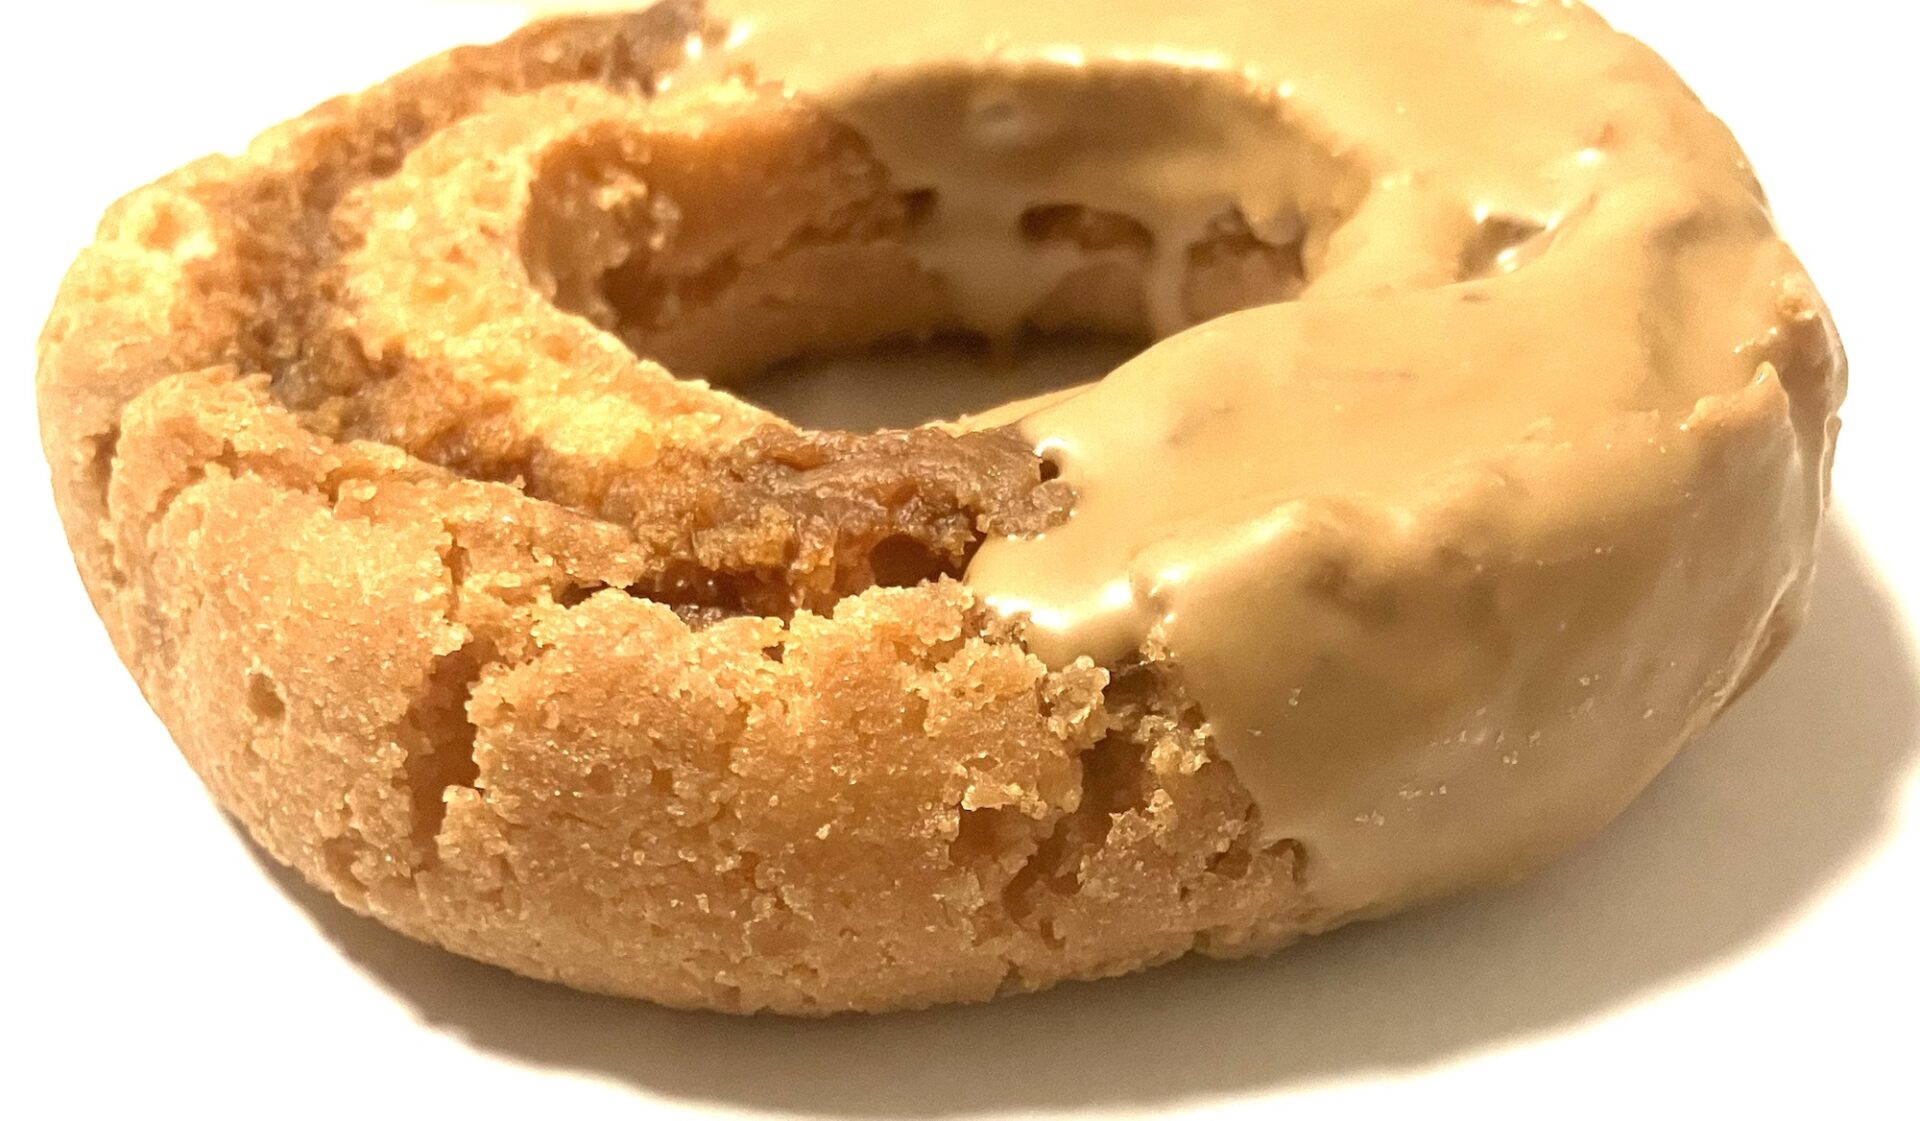 seveneleven-old-fashion-donuts-caramel-side